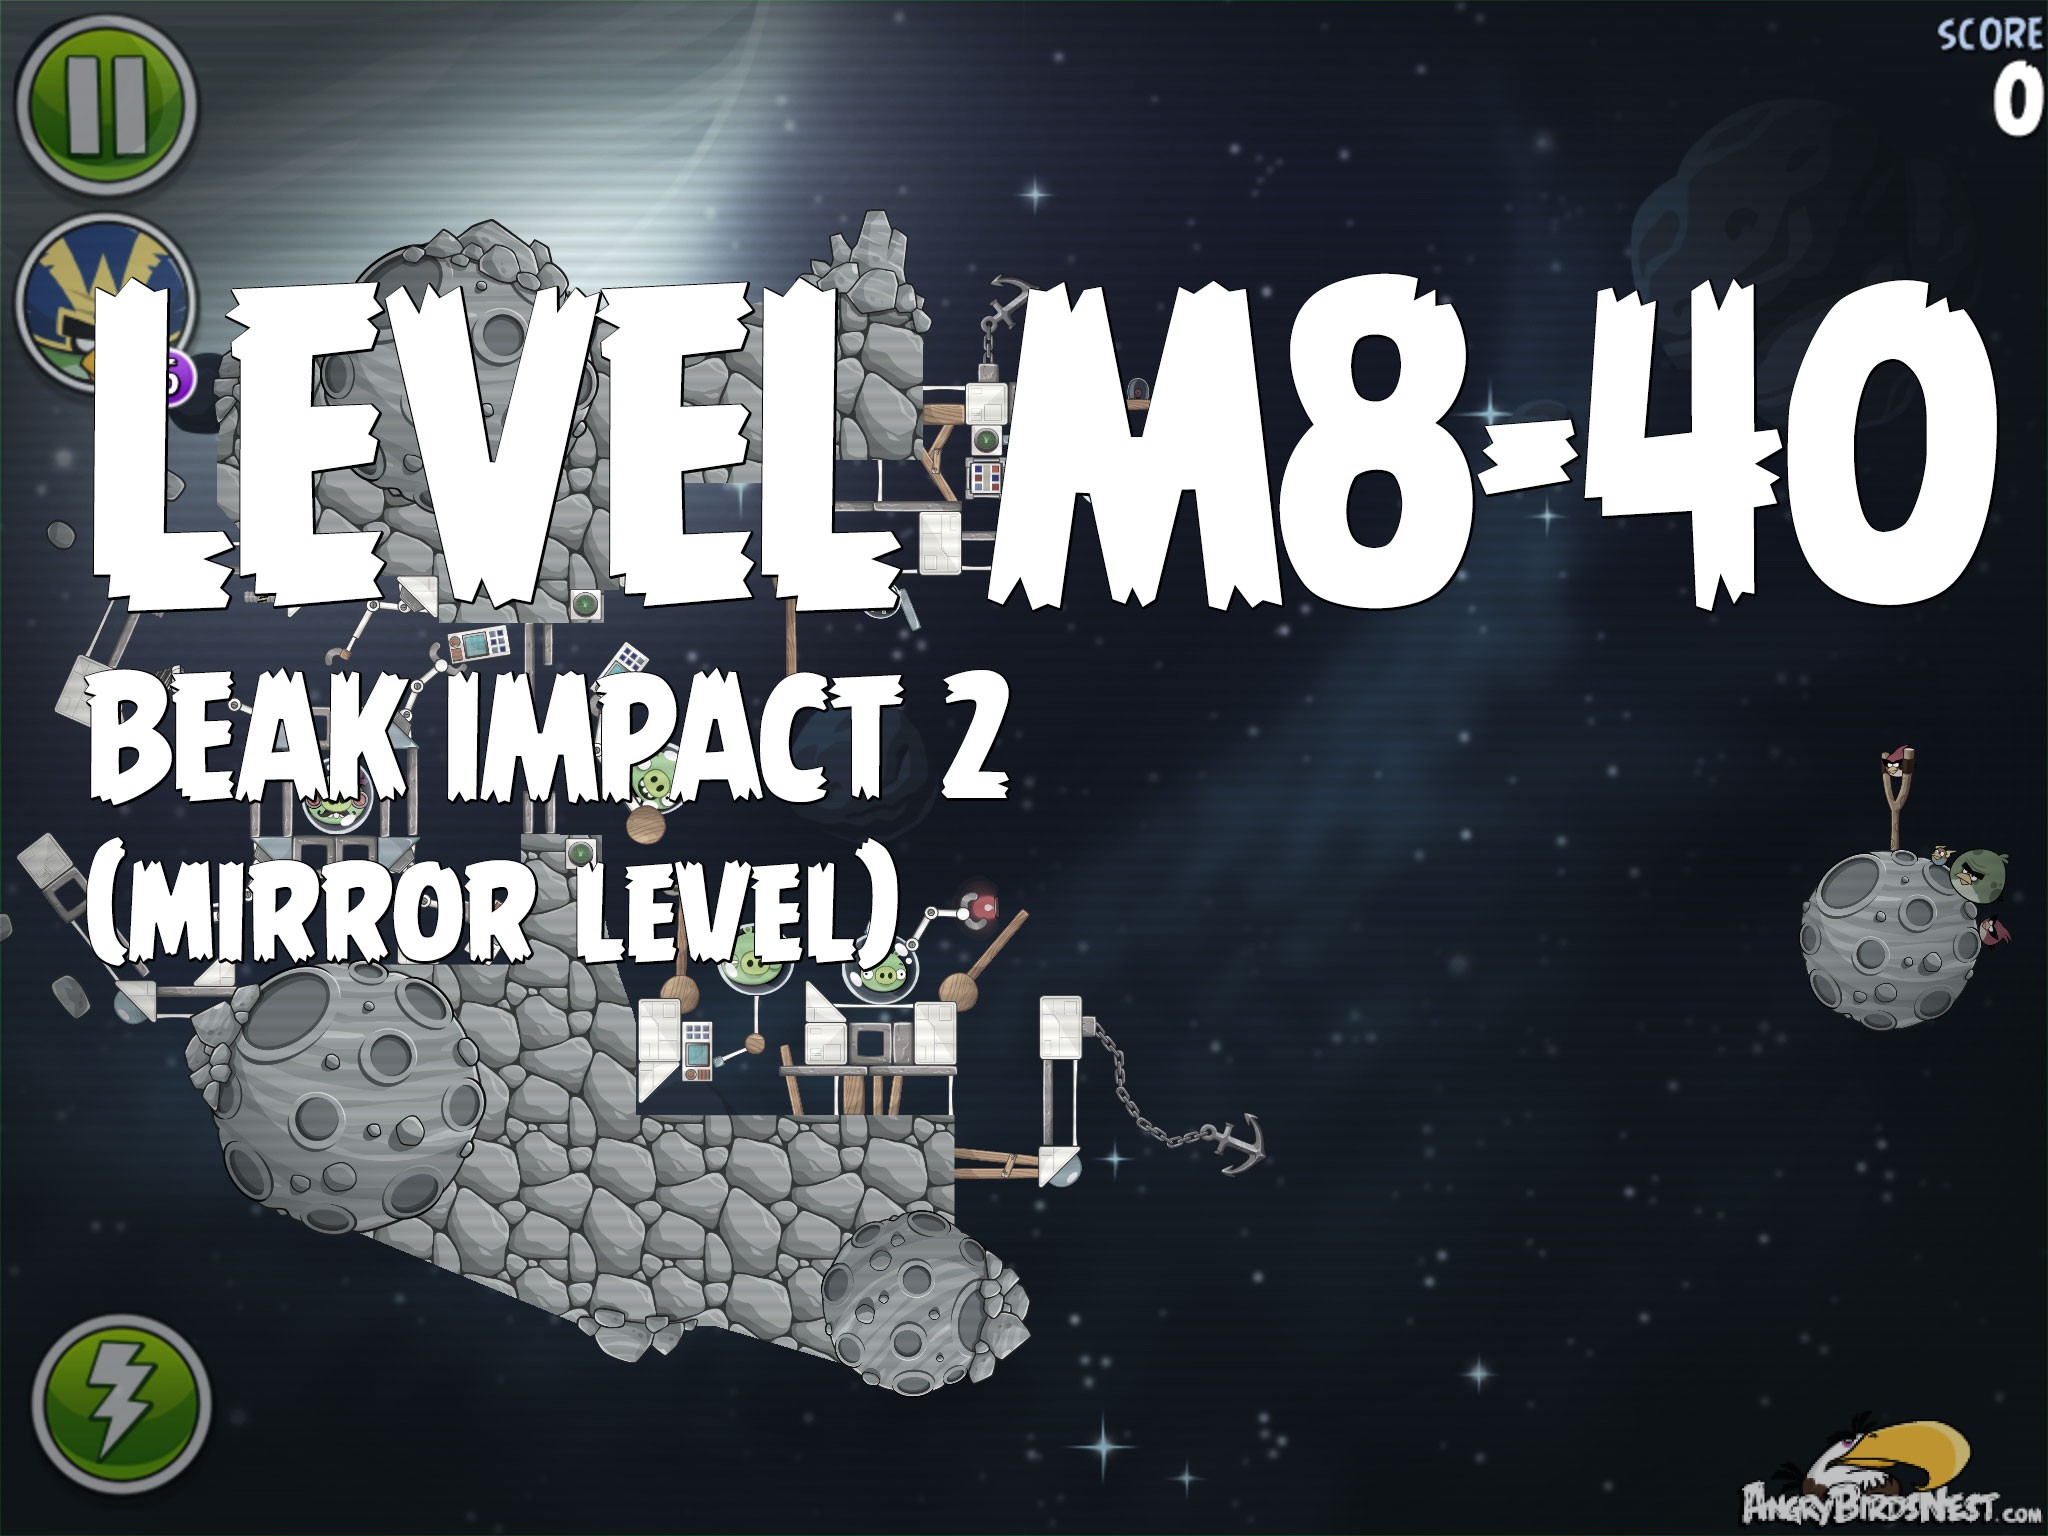 Angry Birds Space Beak Impact 2 Level M8-40